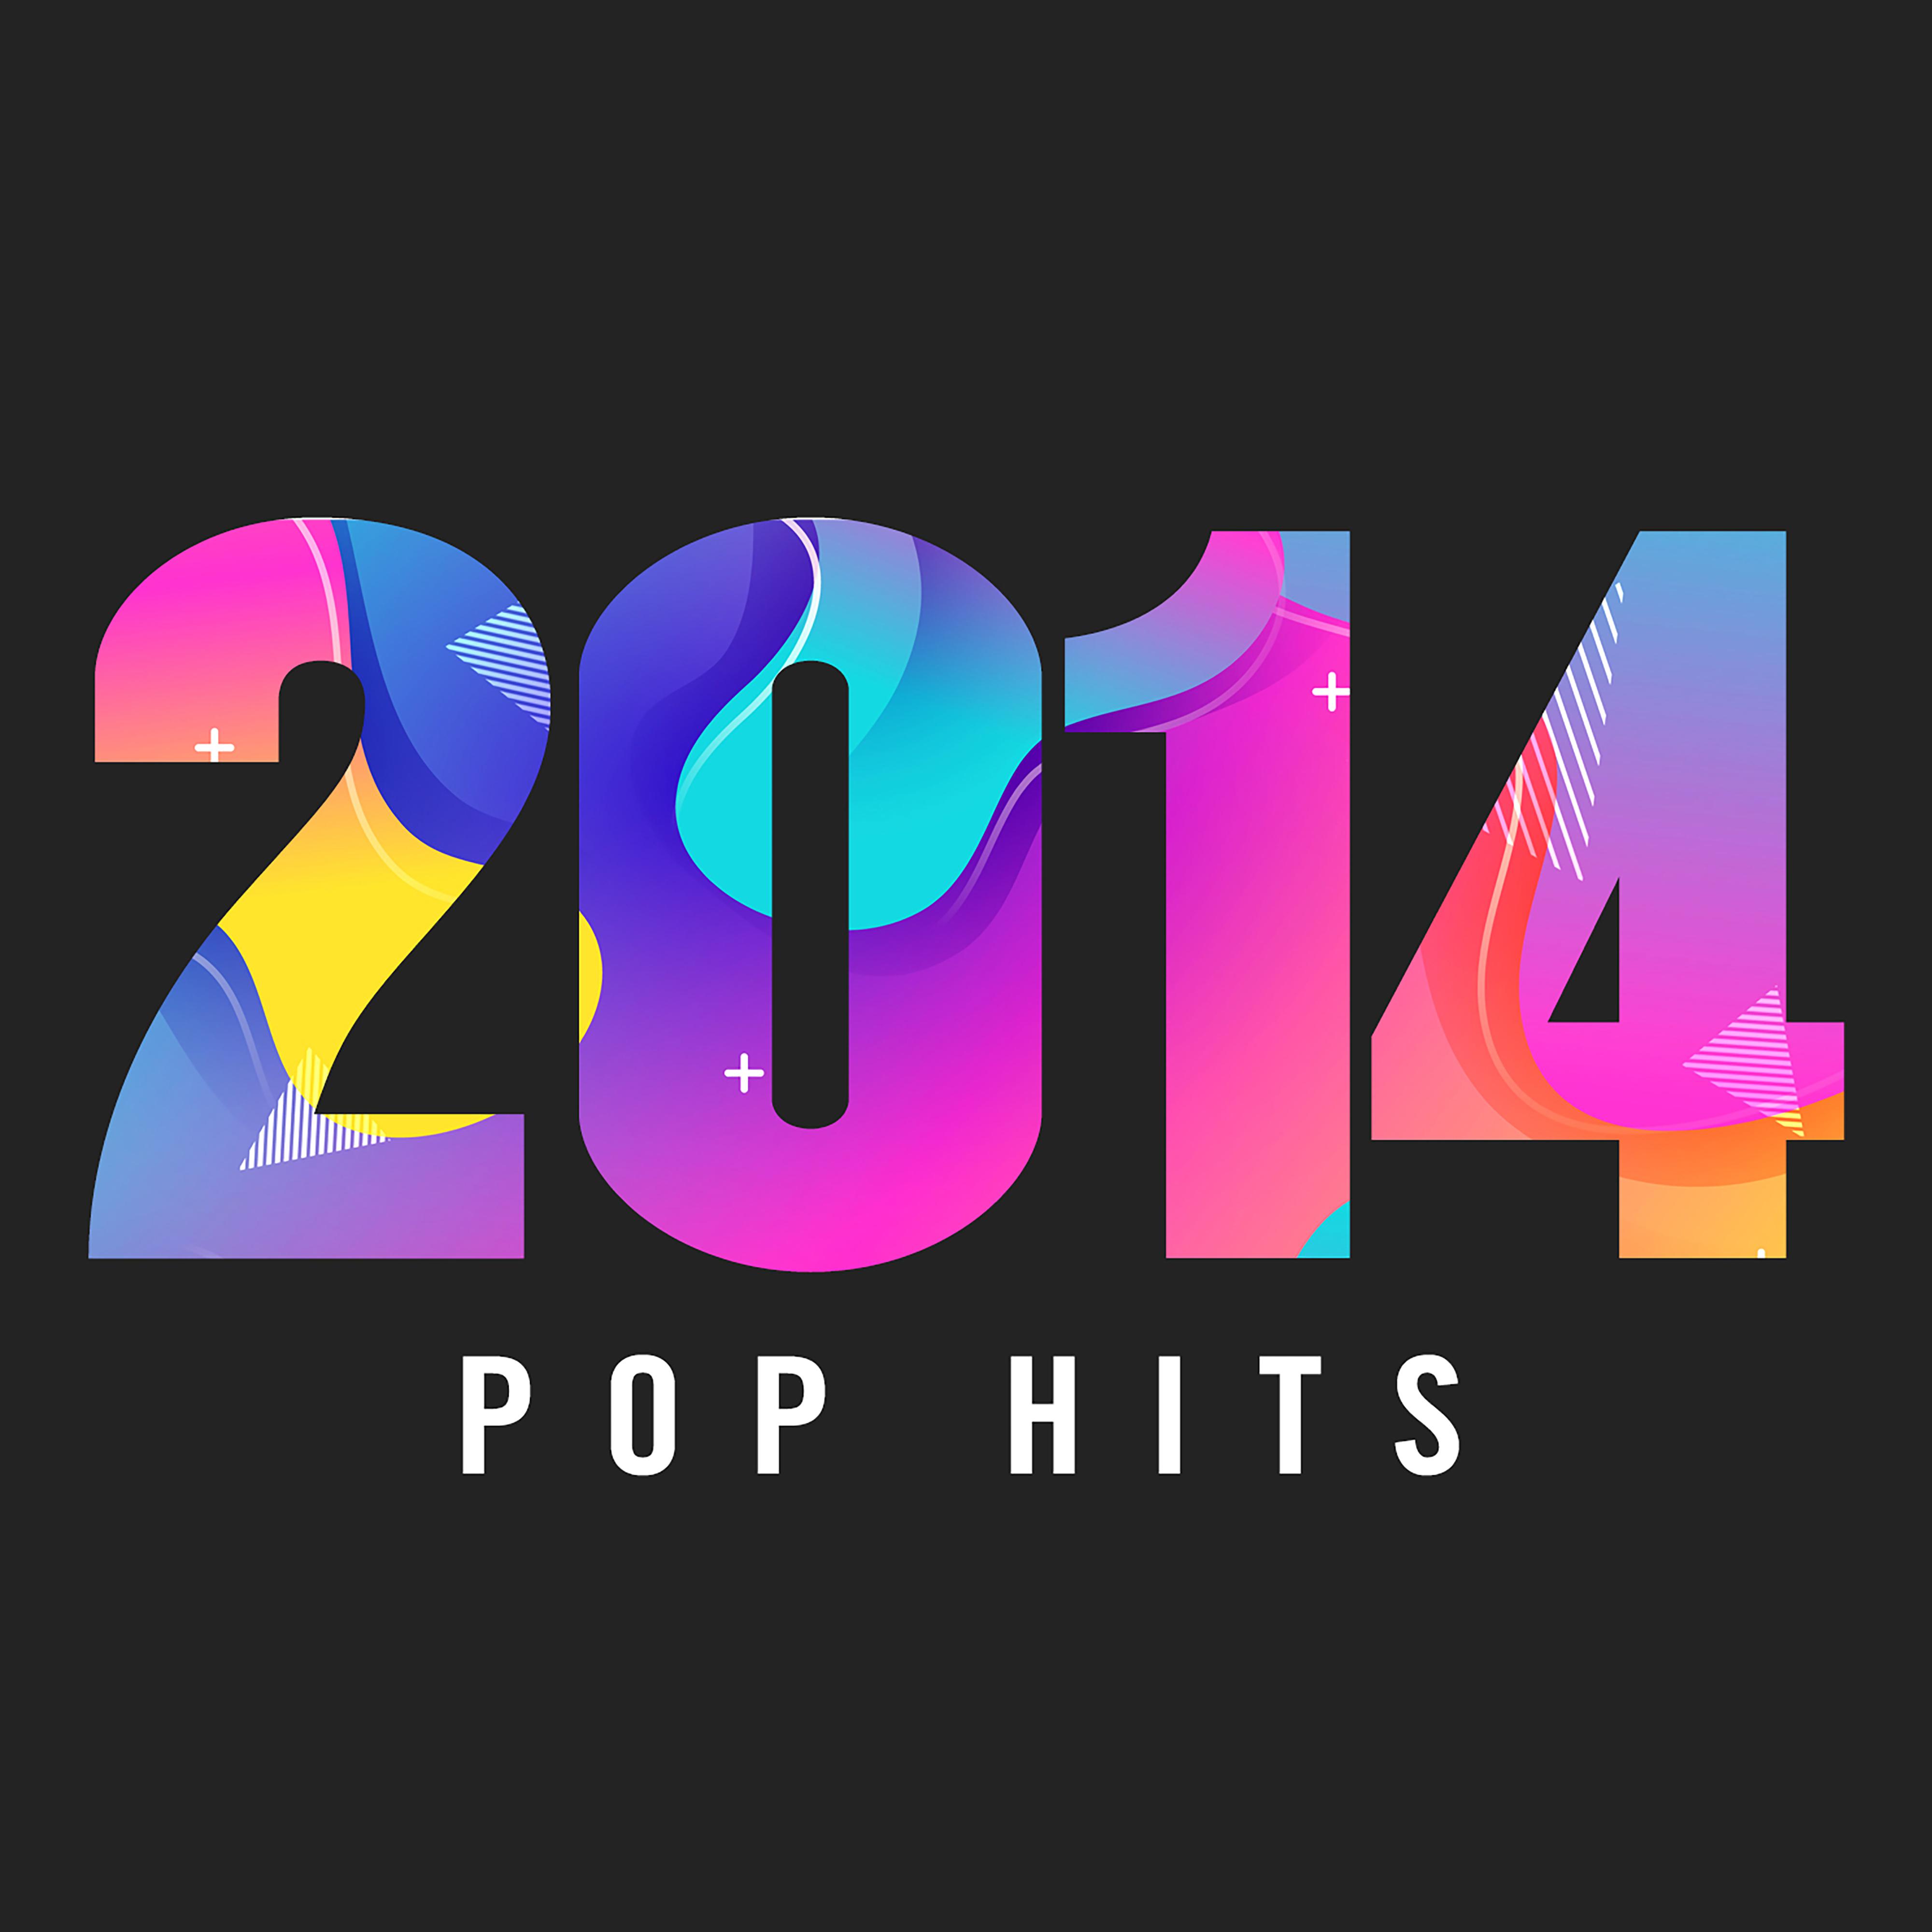 Boom Clap歌词 歌手Charli XCX-专辑2014 Pop Hits-单曲《Boom Clap》LRC歌词下载